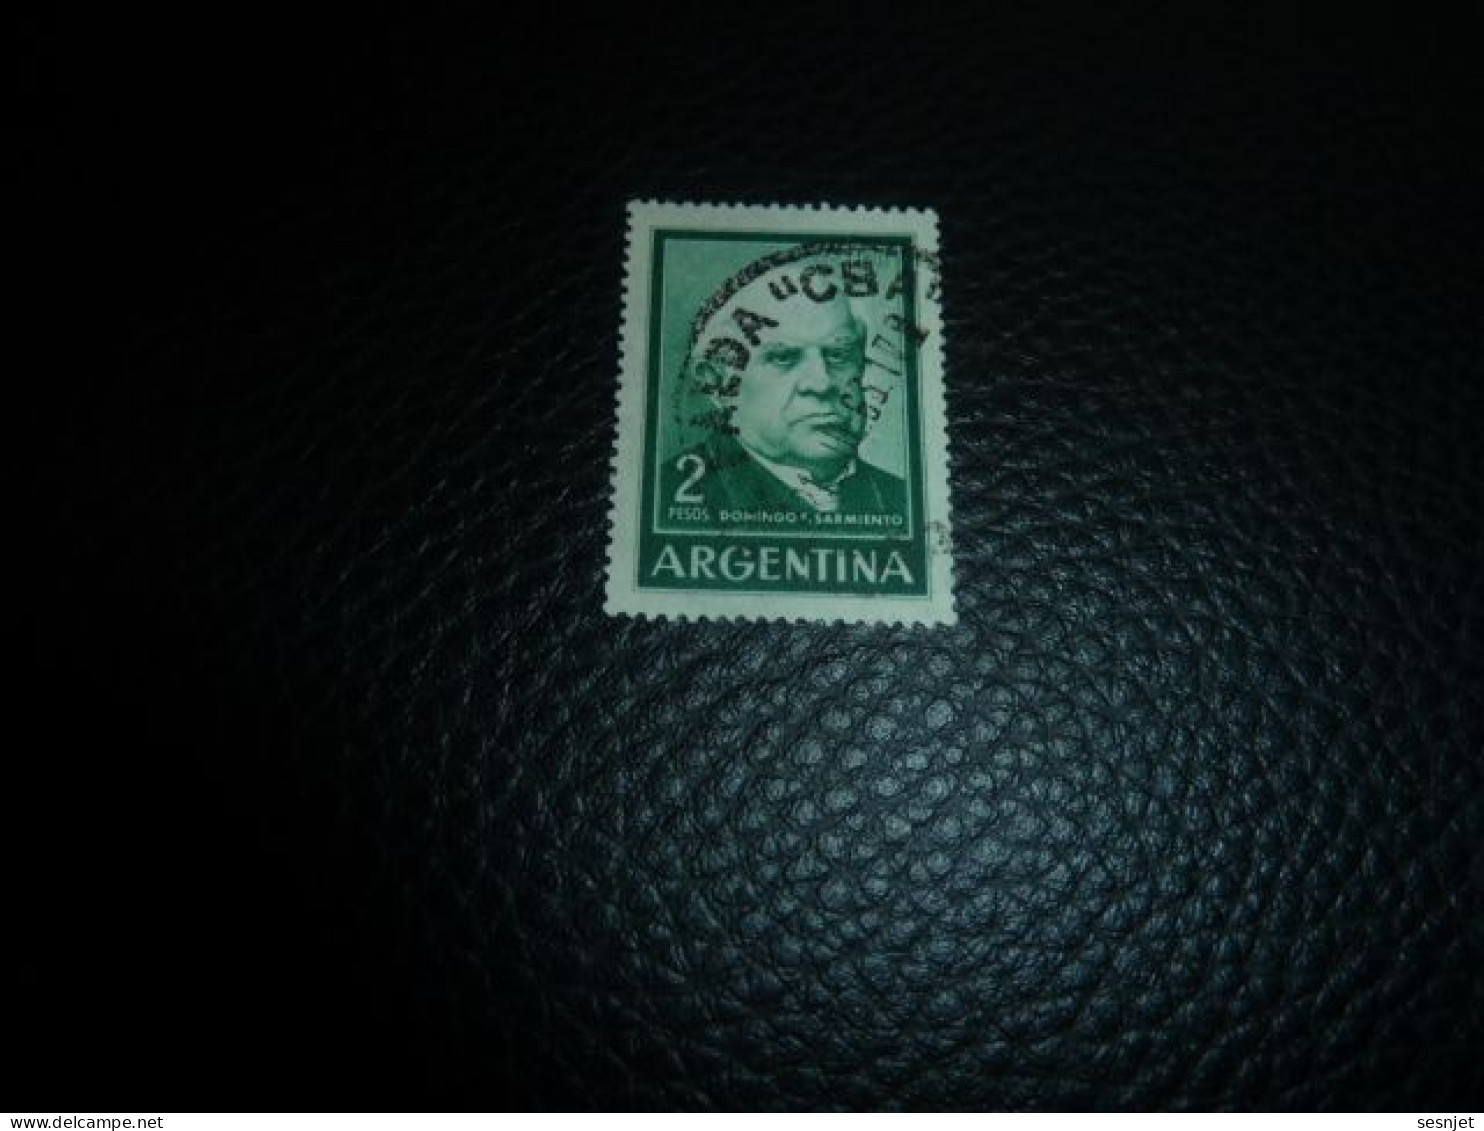 Republica Argentina - Domingo Faustino Sarmiento - 2 Pesos - Yt 662 - Vert - Oblitéré - Année 1962 - - Usati